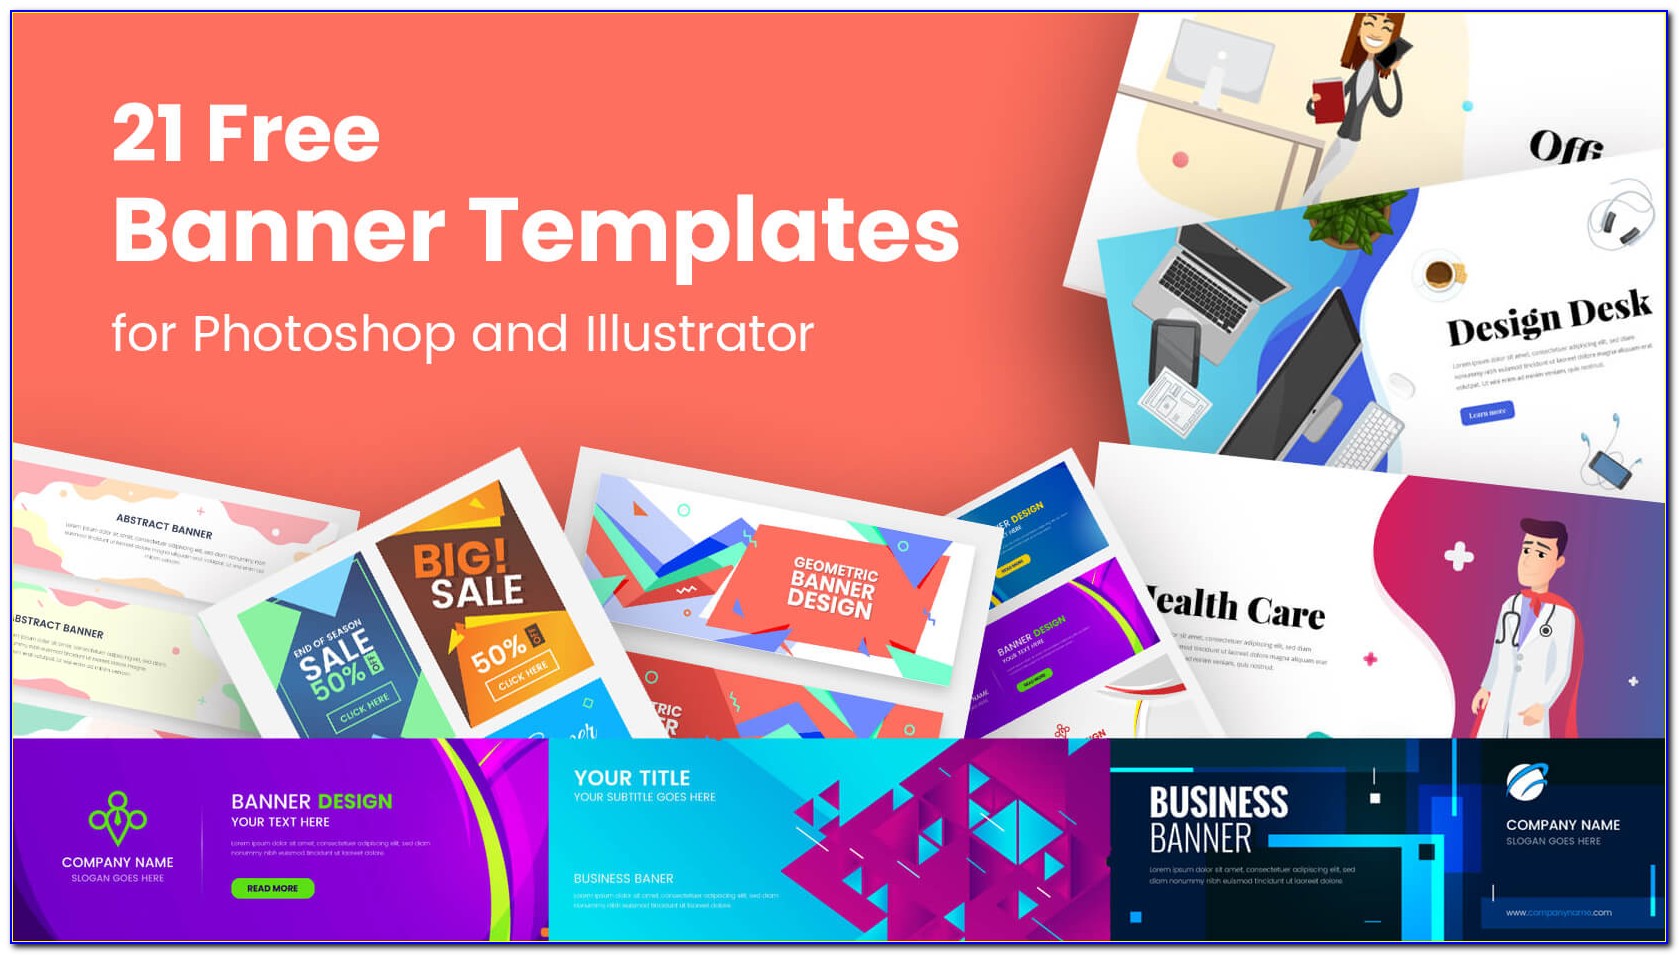 Adobe Illustrator Web Page Templates